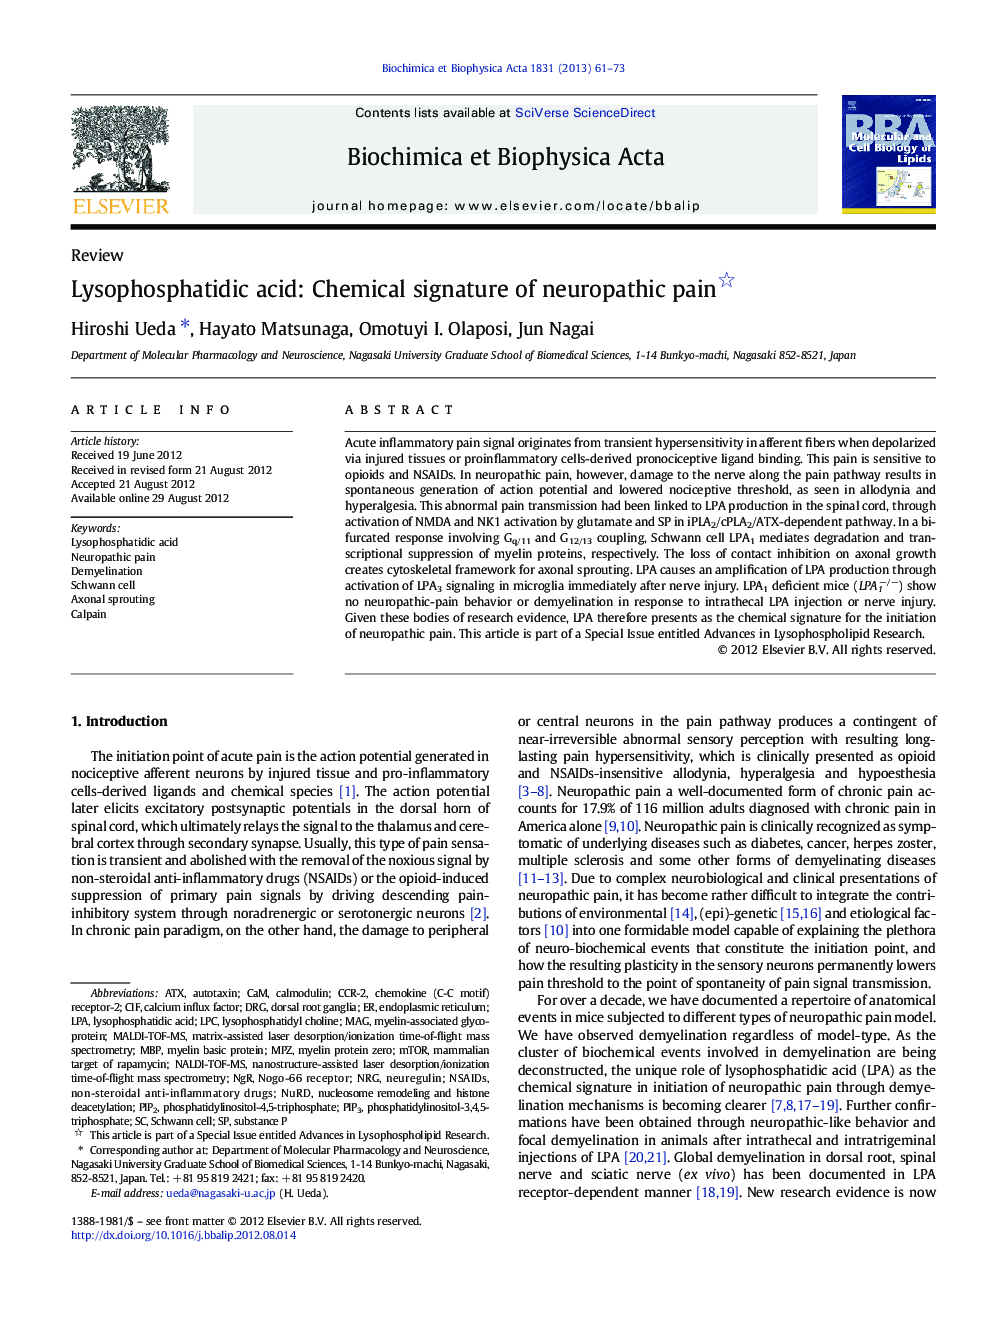 Lysophosphatidic acid: Chemical signature of neuropathic pain 